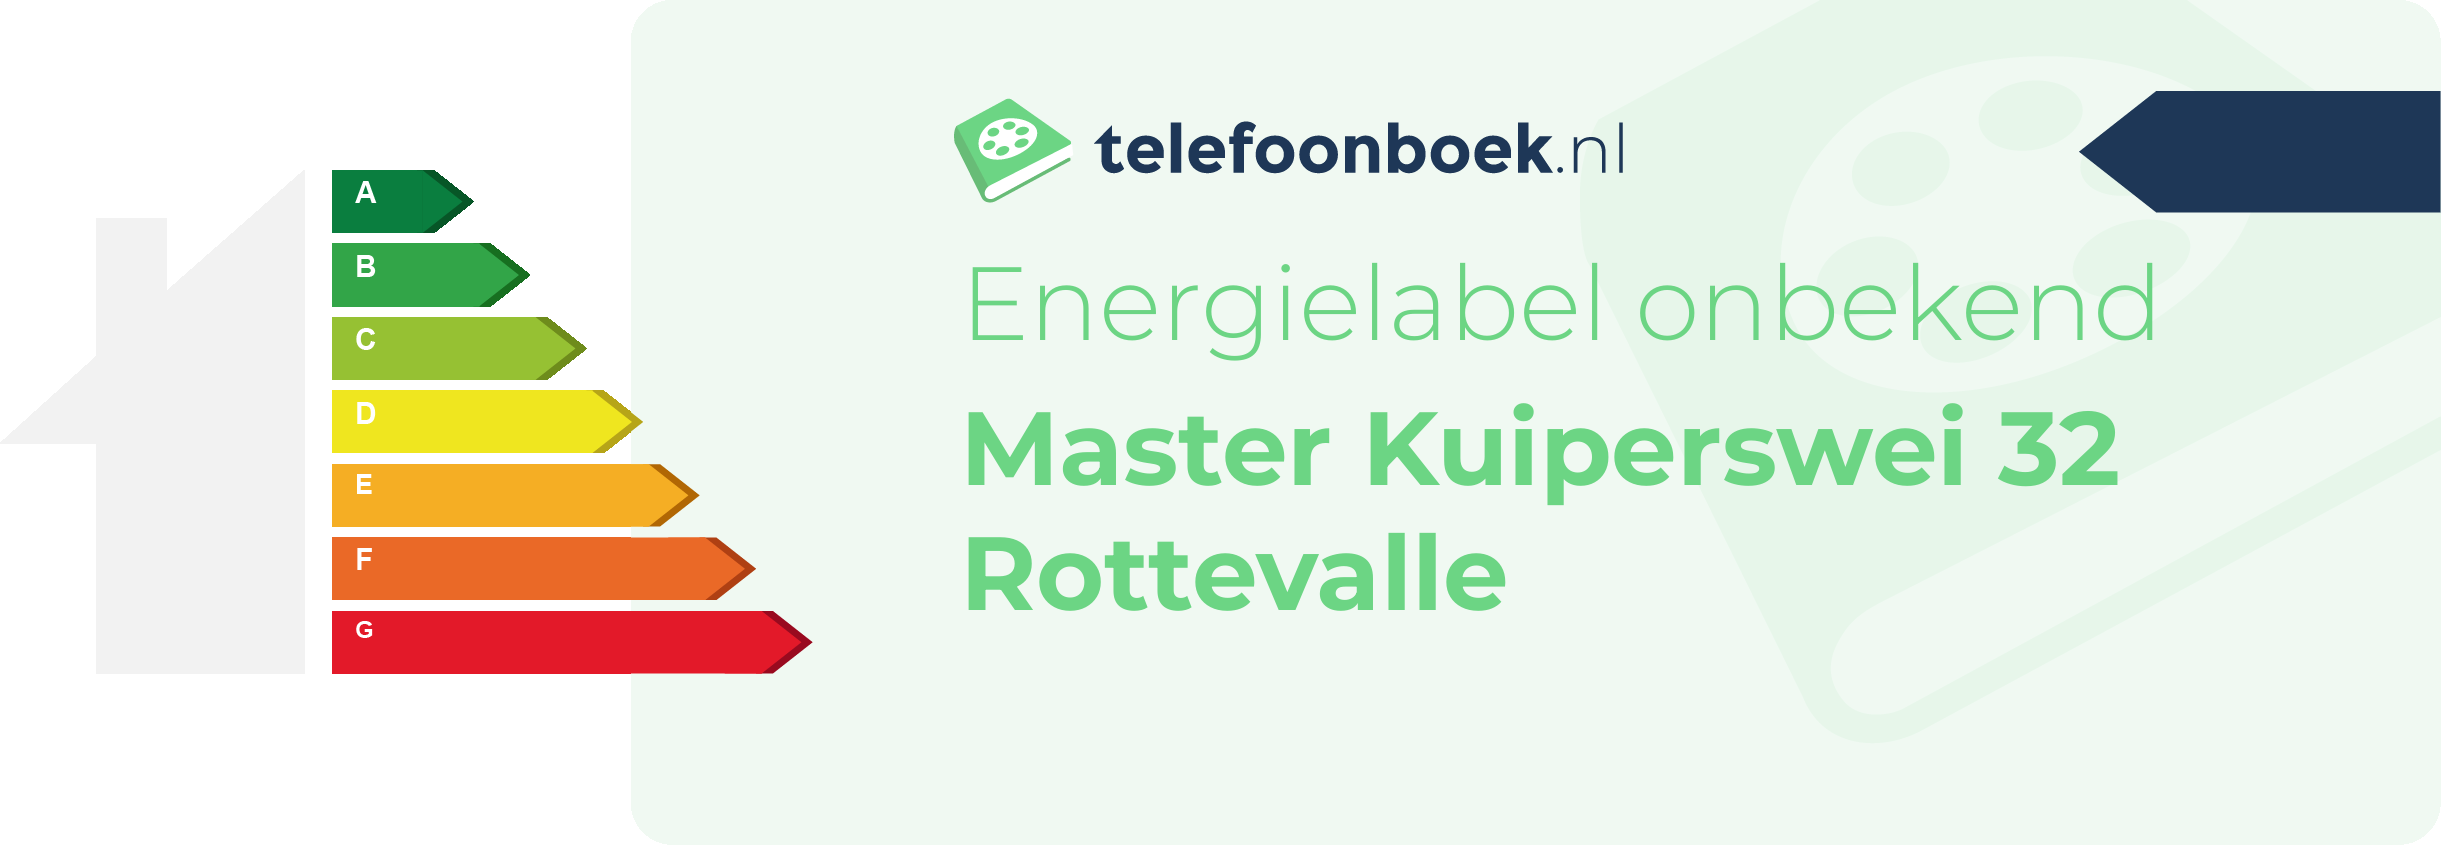 Energielabel Master Kuiperswei 32 Rottevalle